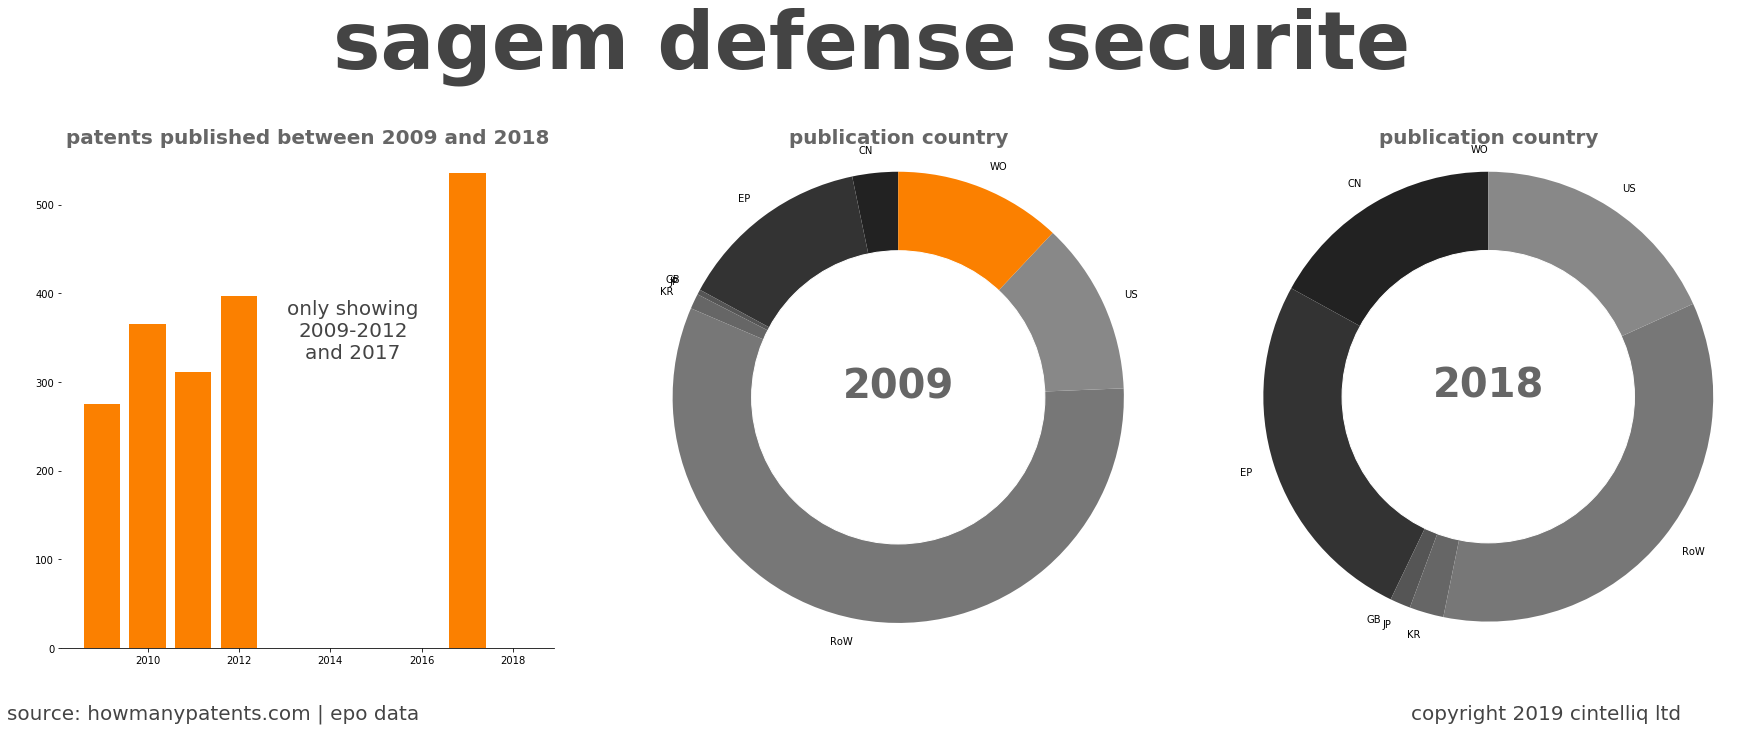 summary of patents for Sagem Defense Securite